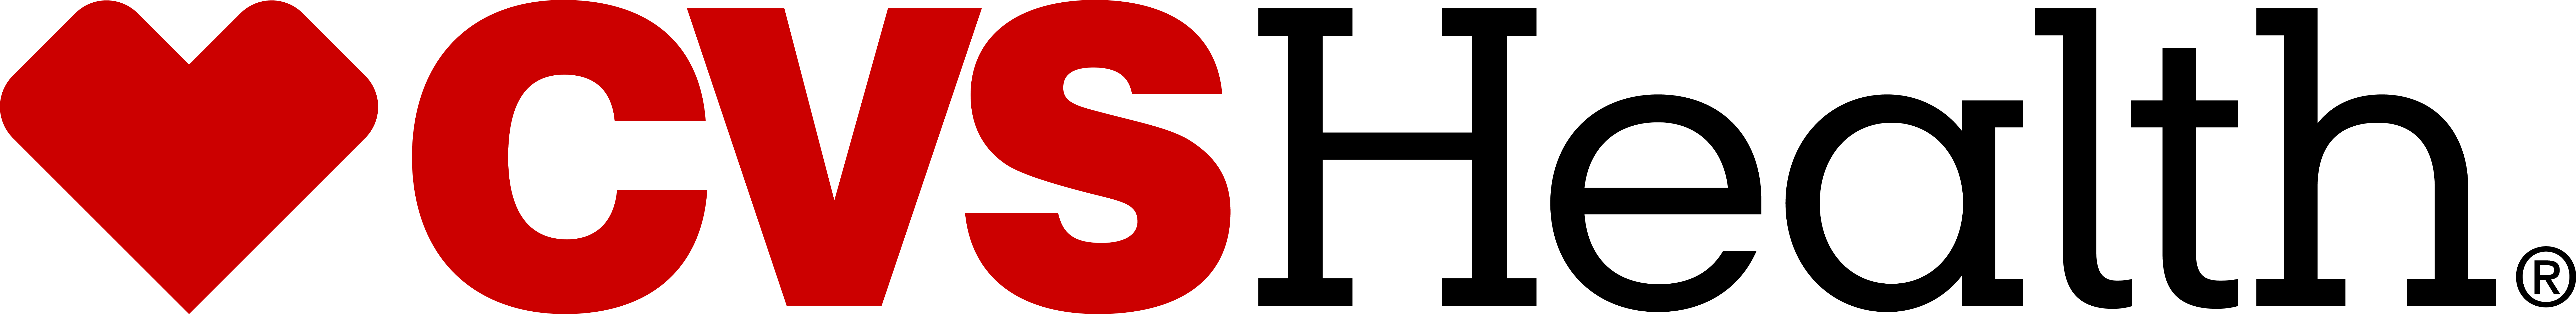 cvs-health-logo 